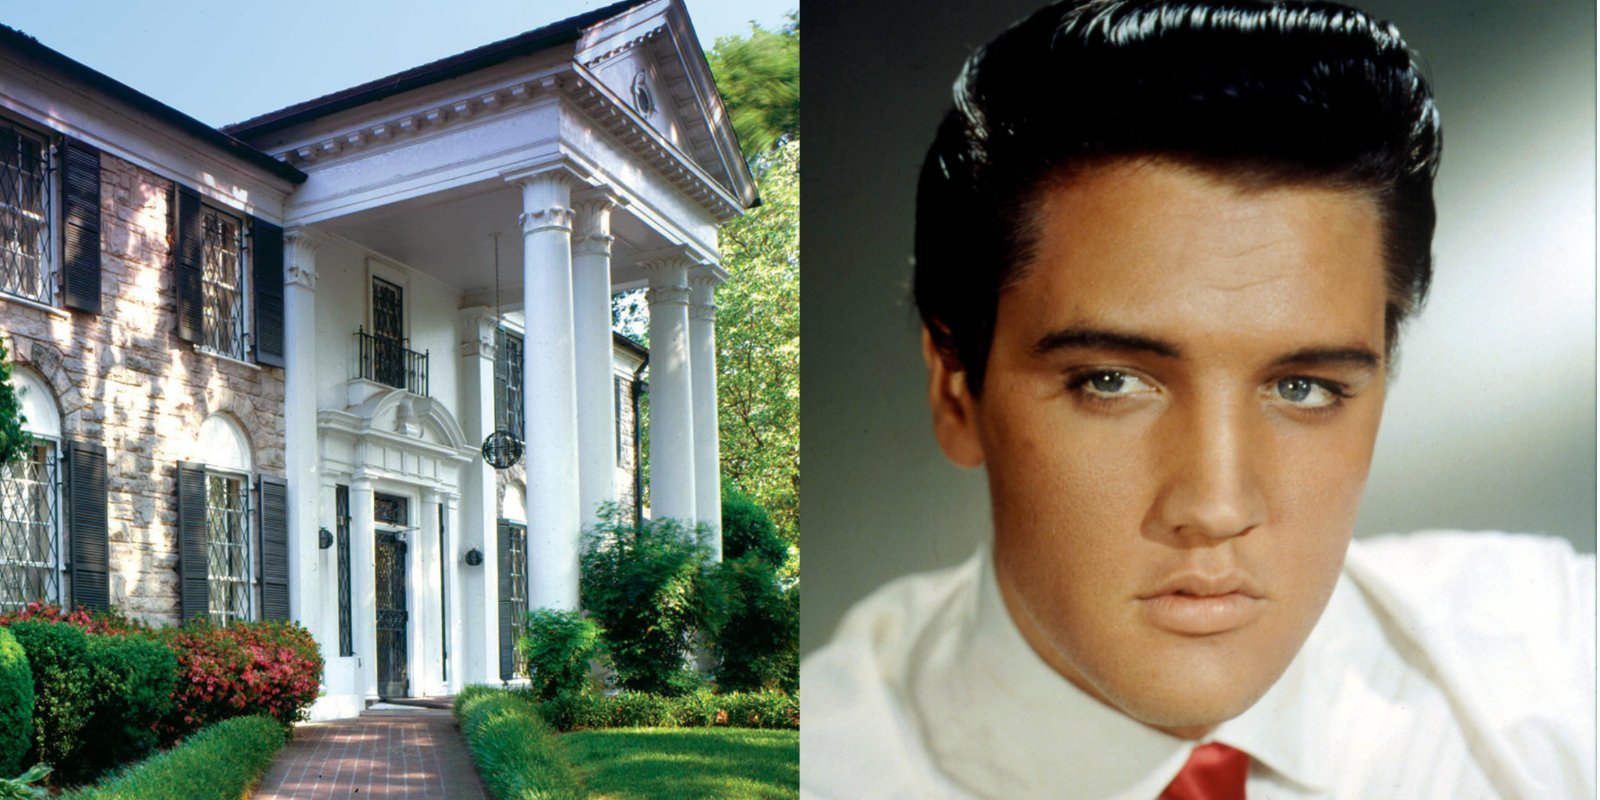 Side by side photographs of Graceland Mansion and Elvis Presley, its owner.